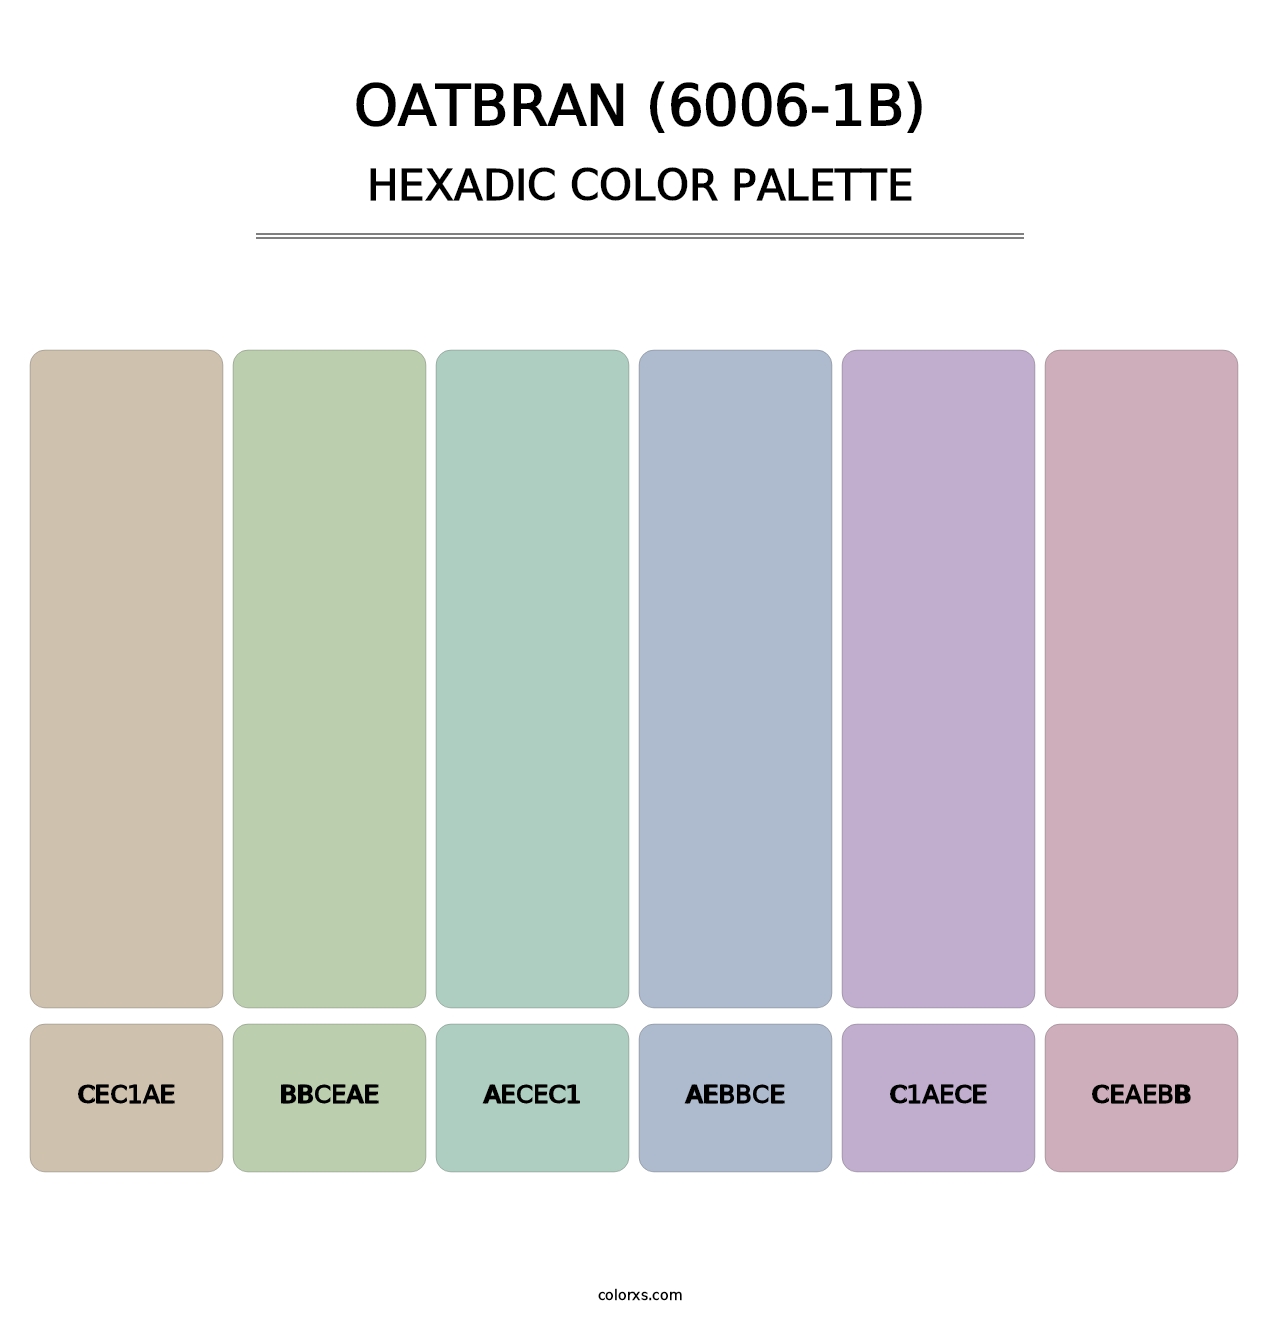 Oatbran (6006-1B) - Hexadic Color Palette